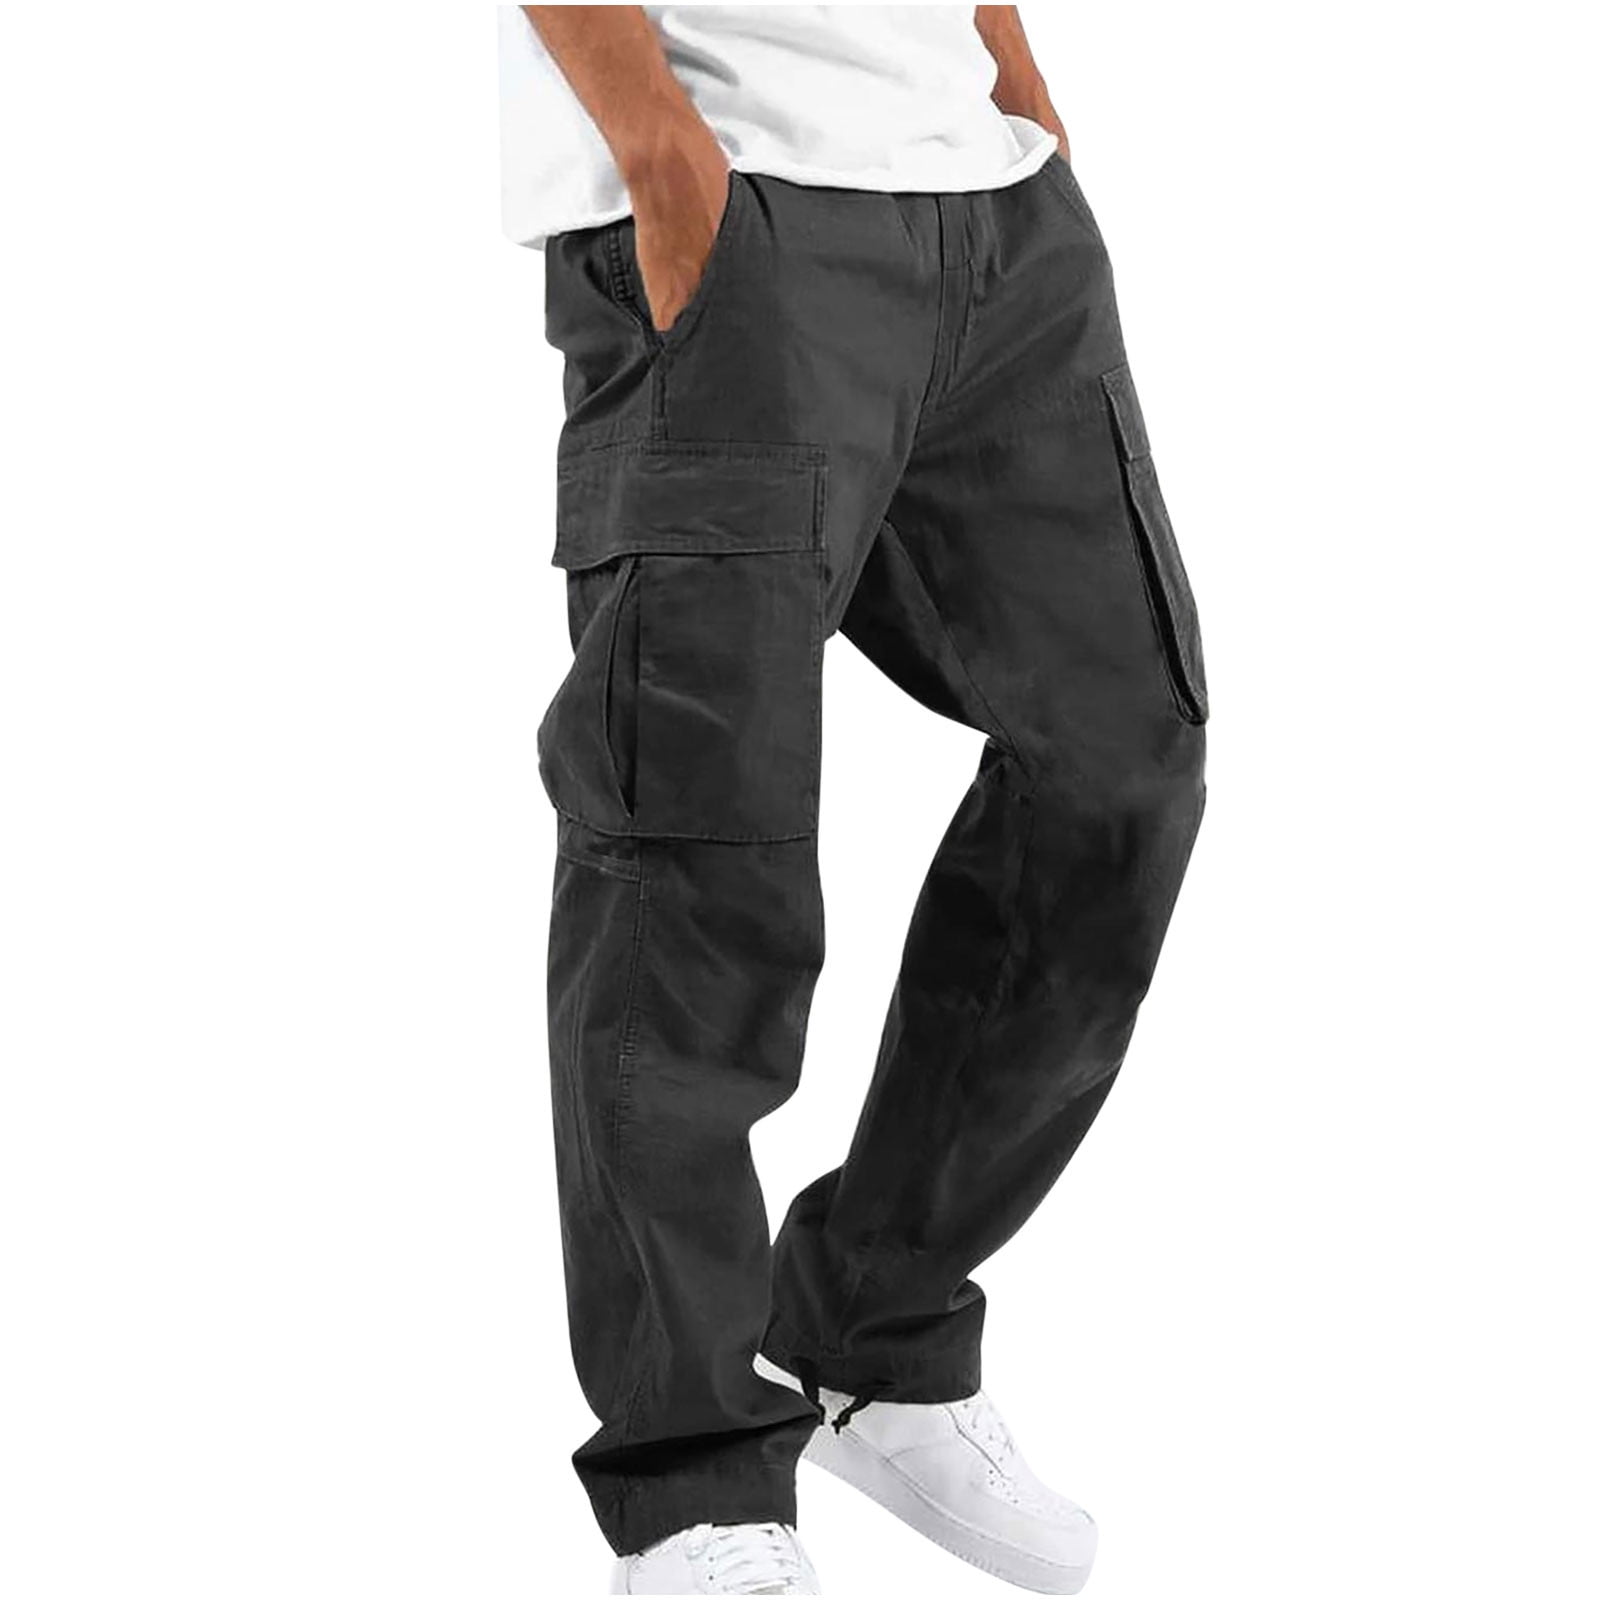 Buy OUTSON Mens Fashion Joggers Sports Pants Casual Cotton Cargo Pants Gym  Sweatpants Trousers Mens Long Pant Black at Amazon.in